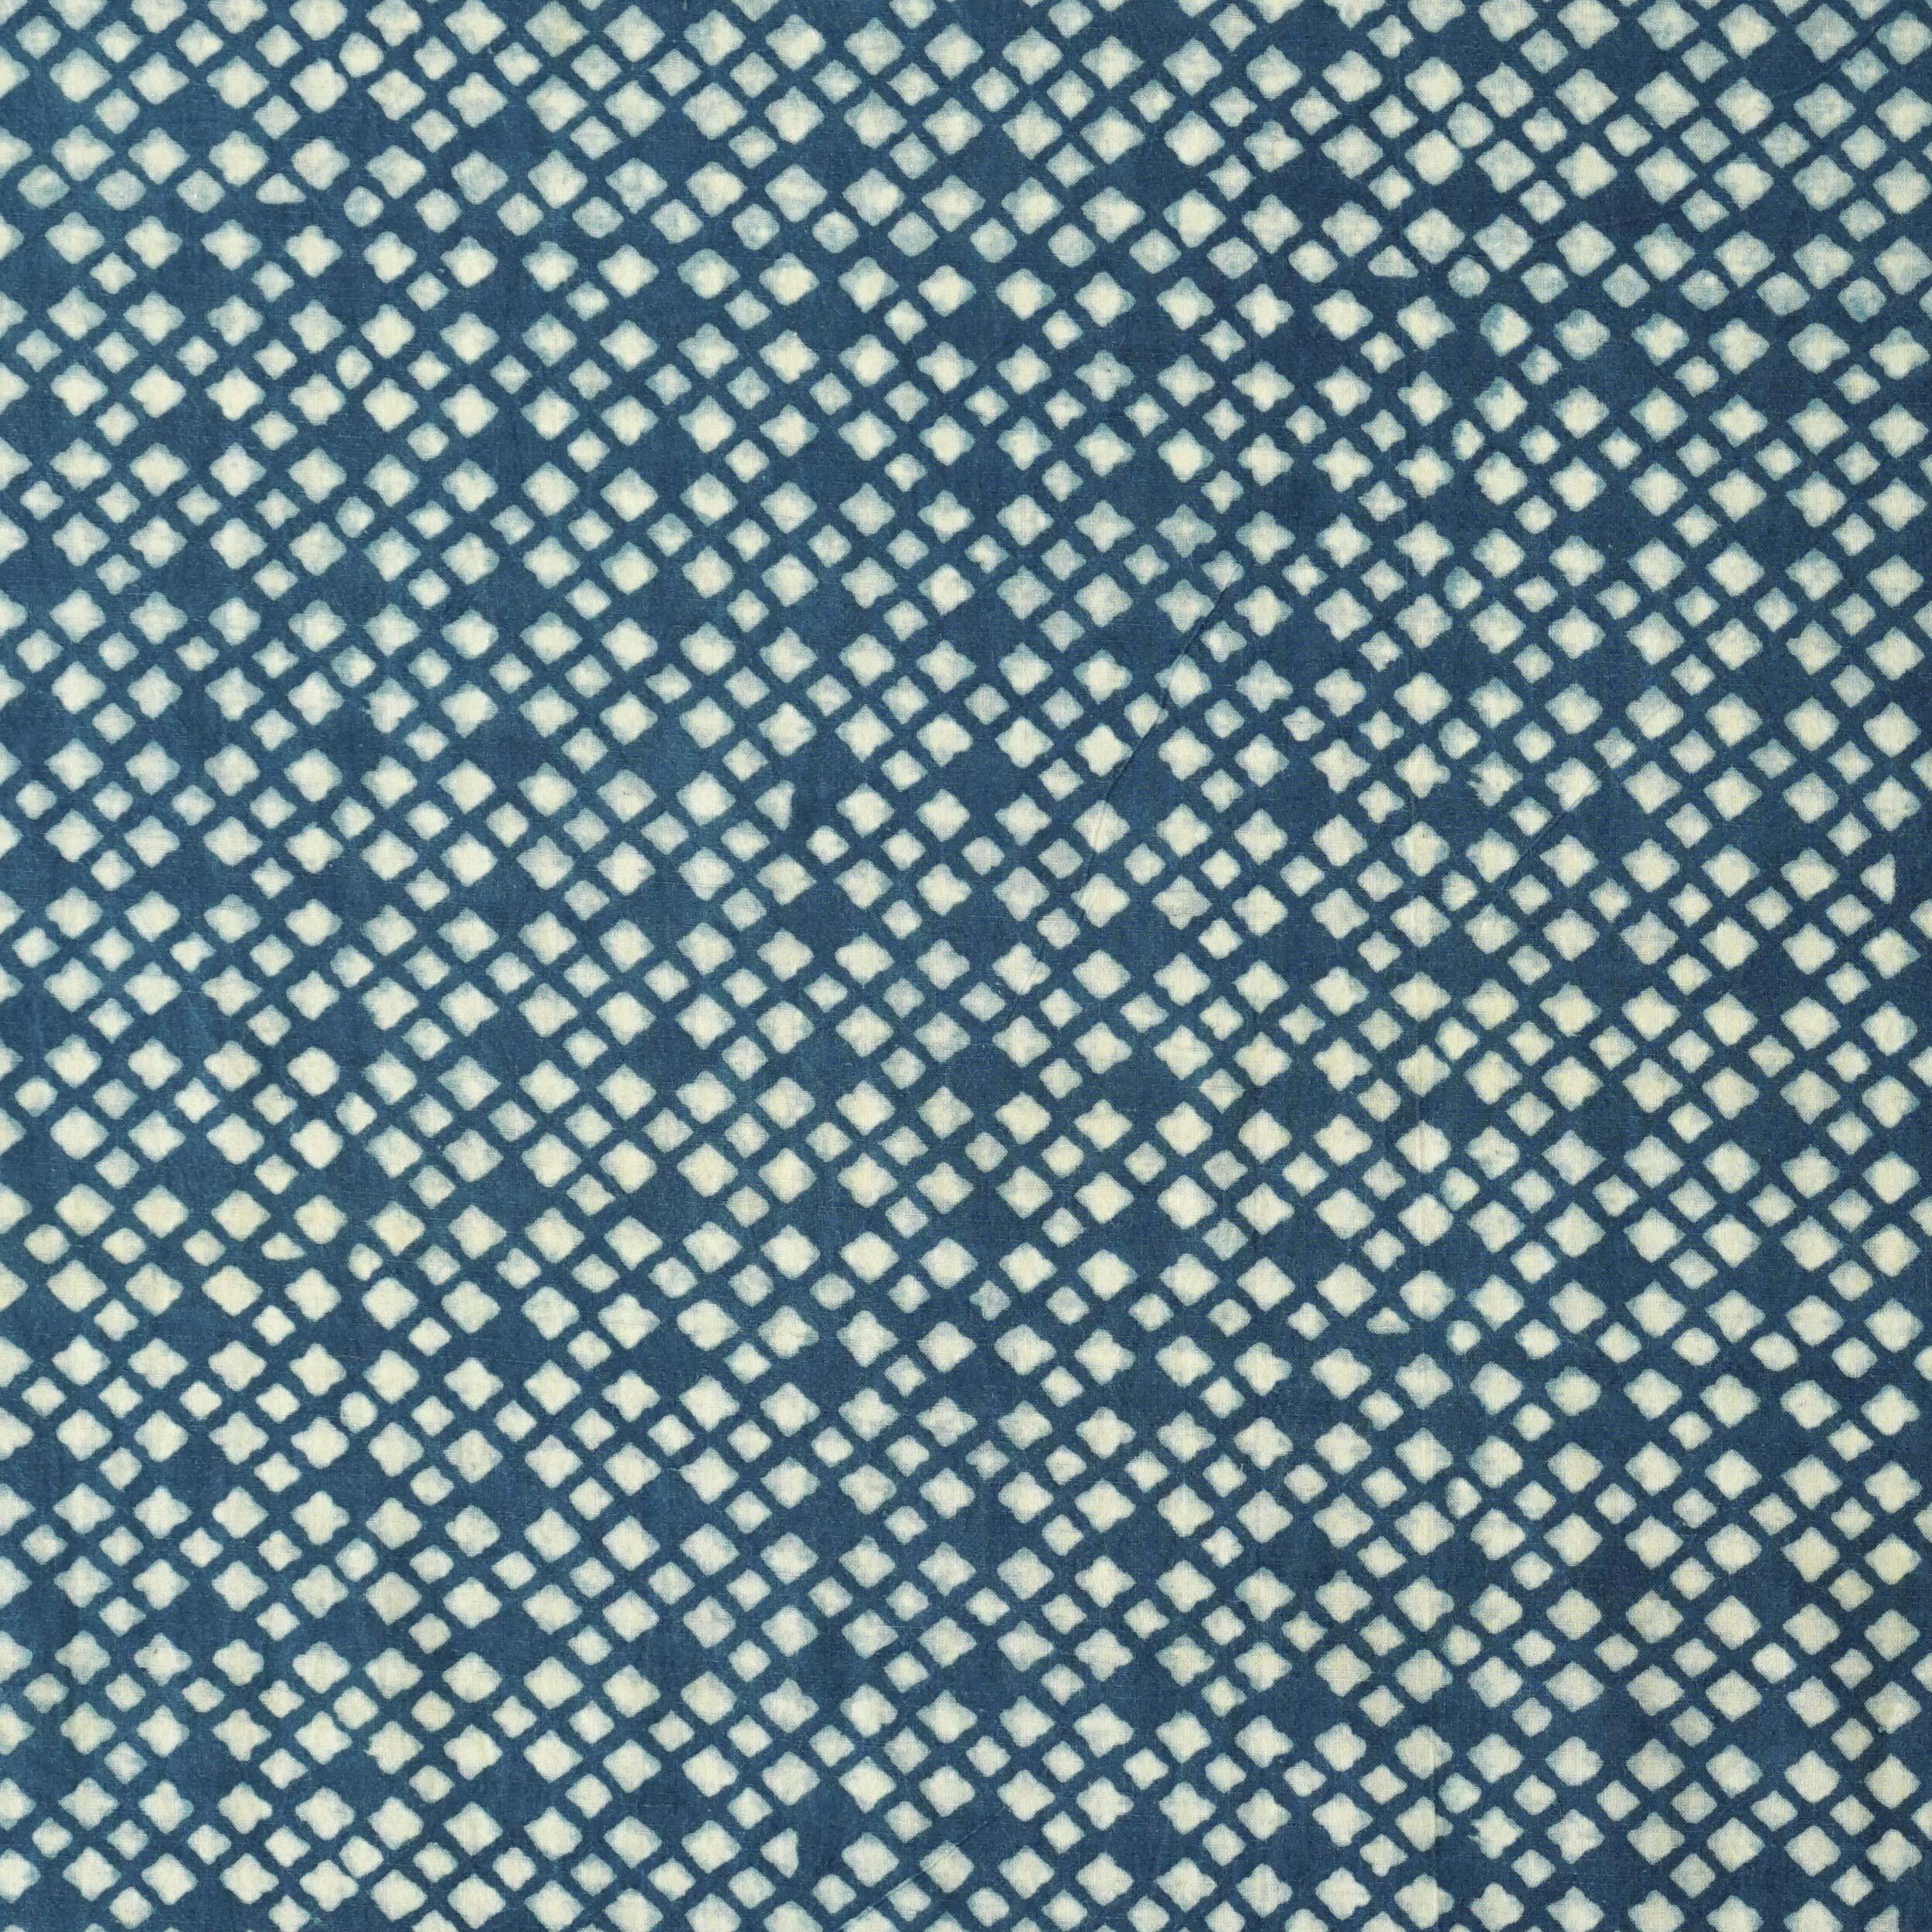 SIK28 - Indian Woodblock-Printed Cotton Fabric - Mosaic Design - Indigo Dye - Flat